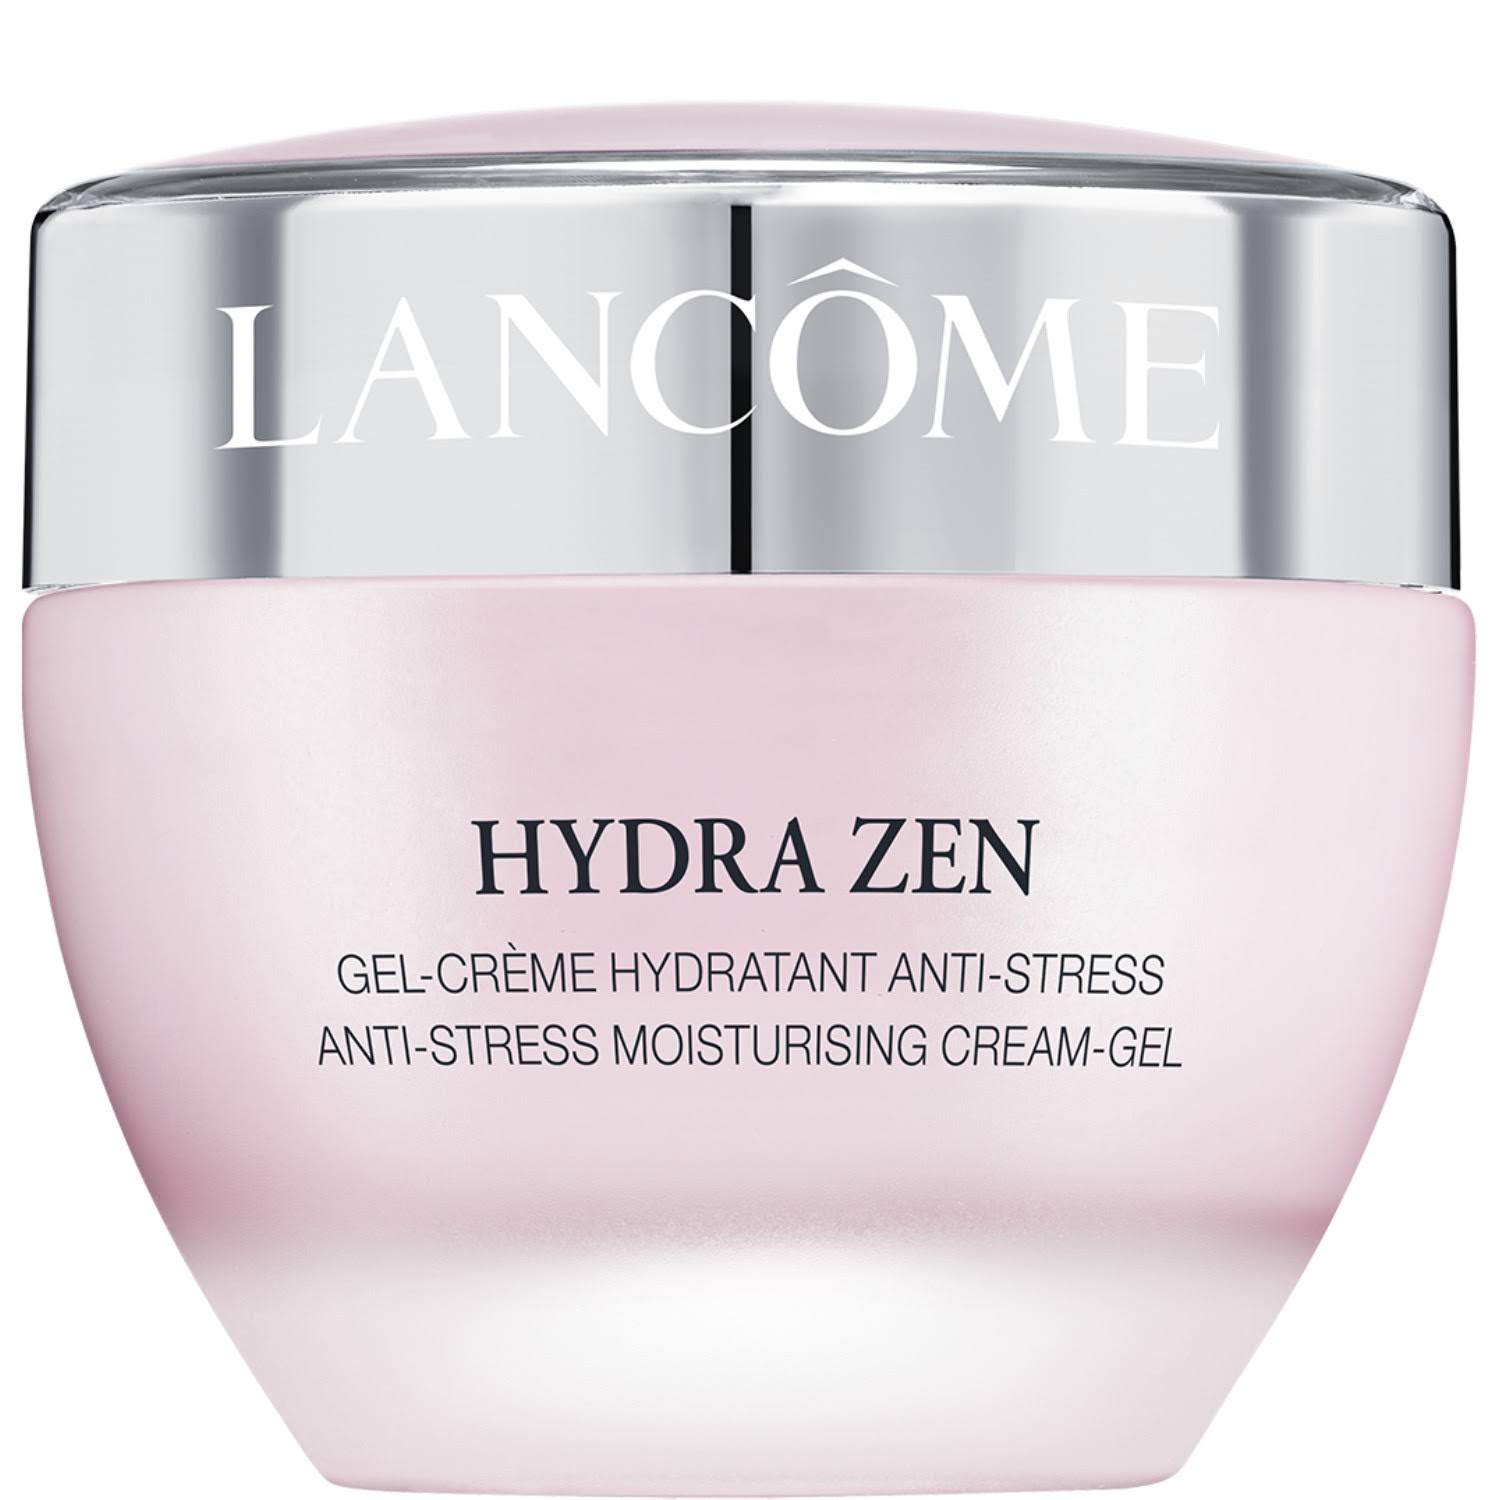 Lancome Hydrazen Extreme Soothing Moisturizing Cream Gel - 50ml